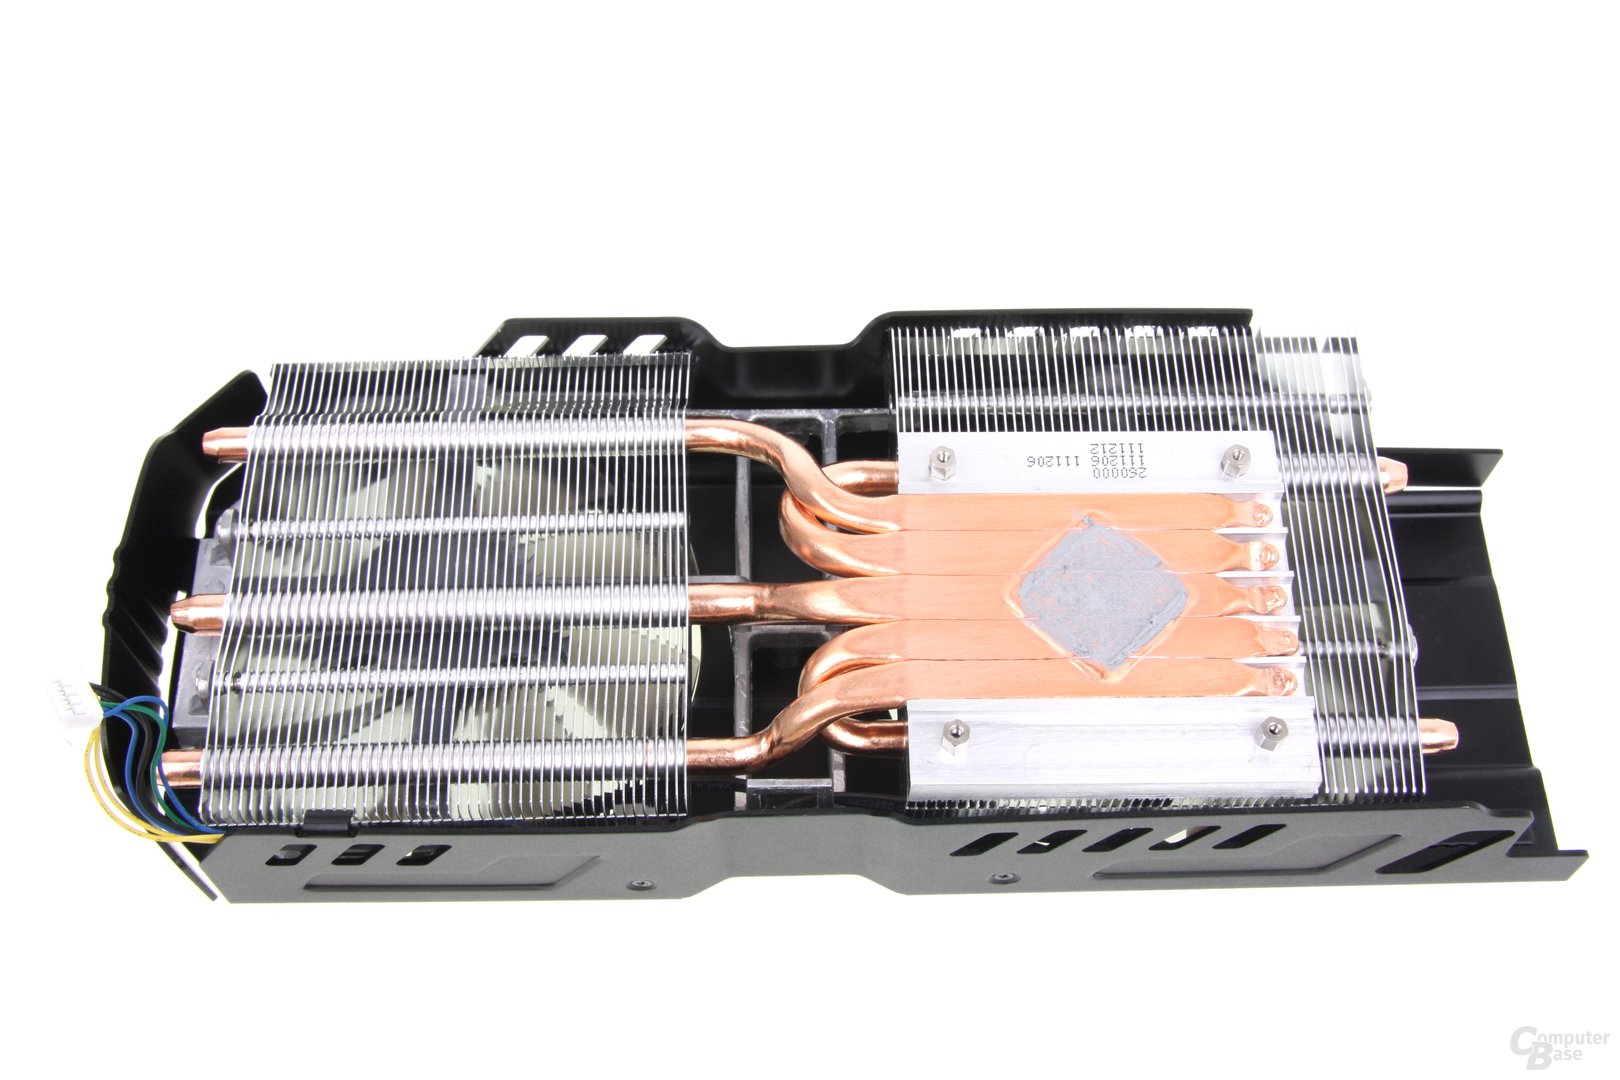 Radeon HD 7950 DCII Kühlerrückseite